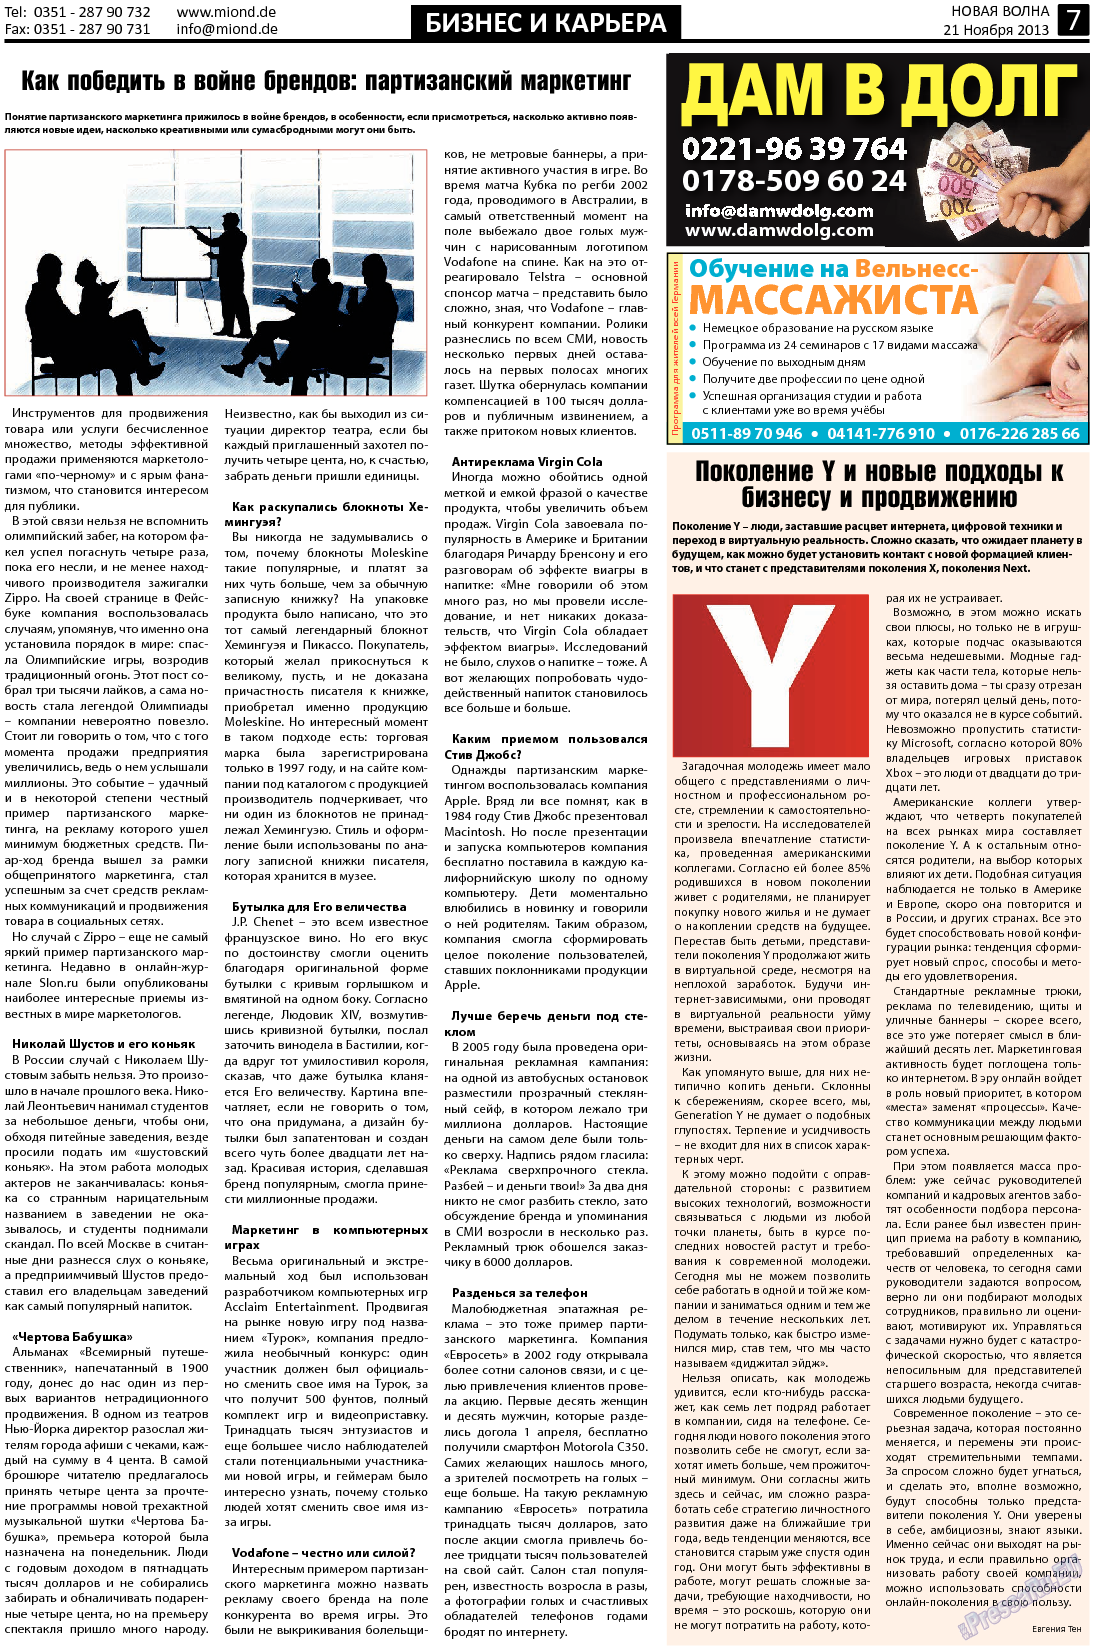 Новая Wолна, газета. 2013 №47 стр.7